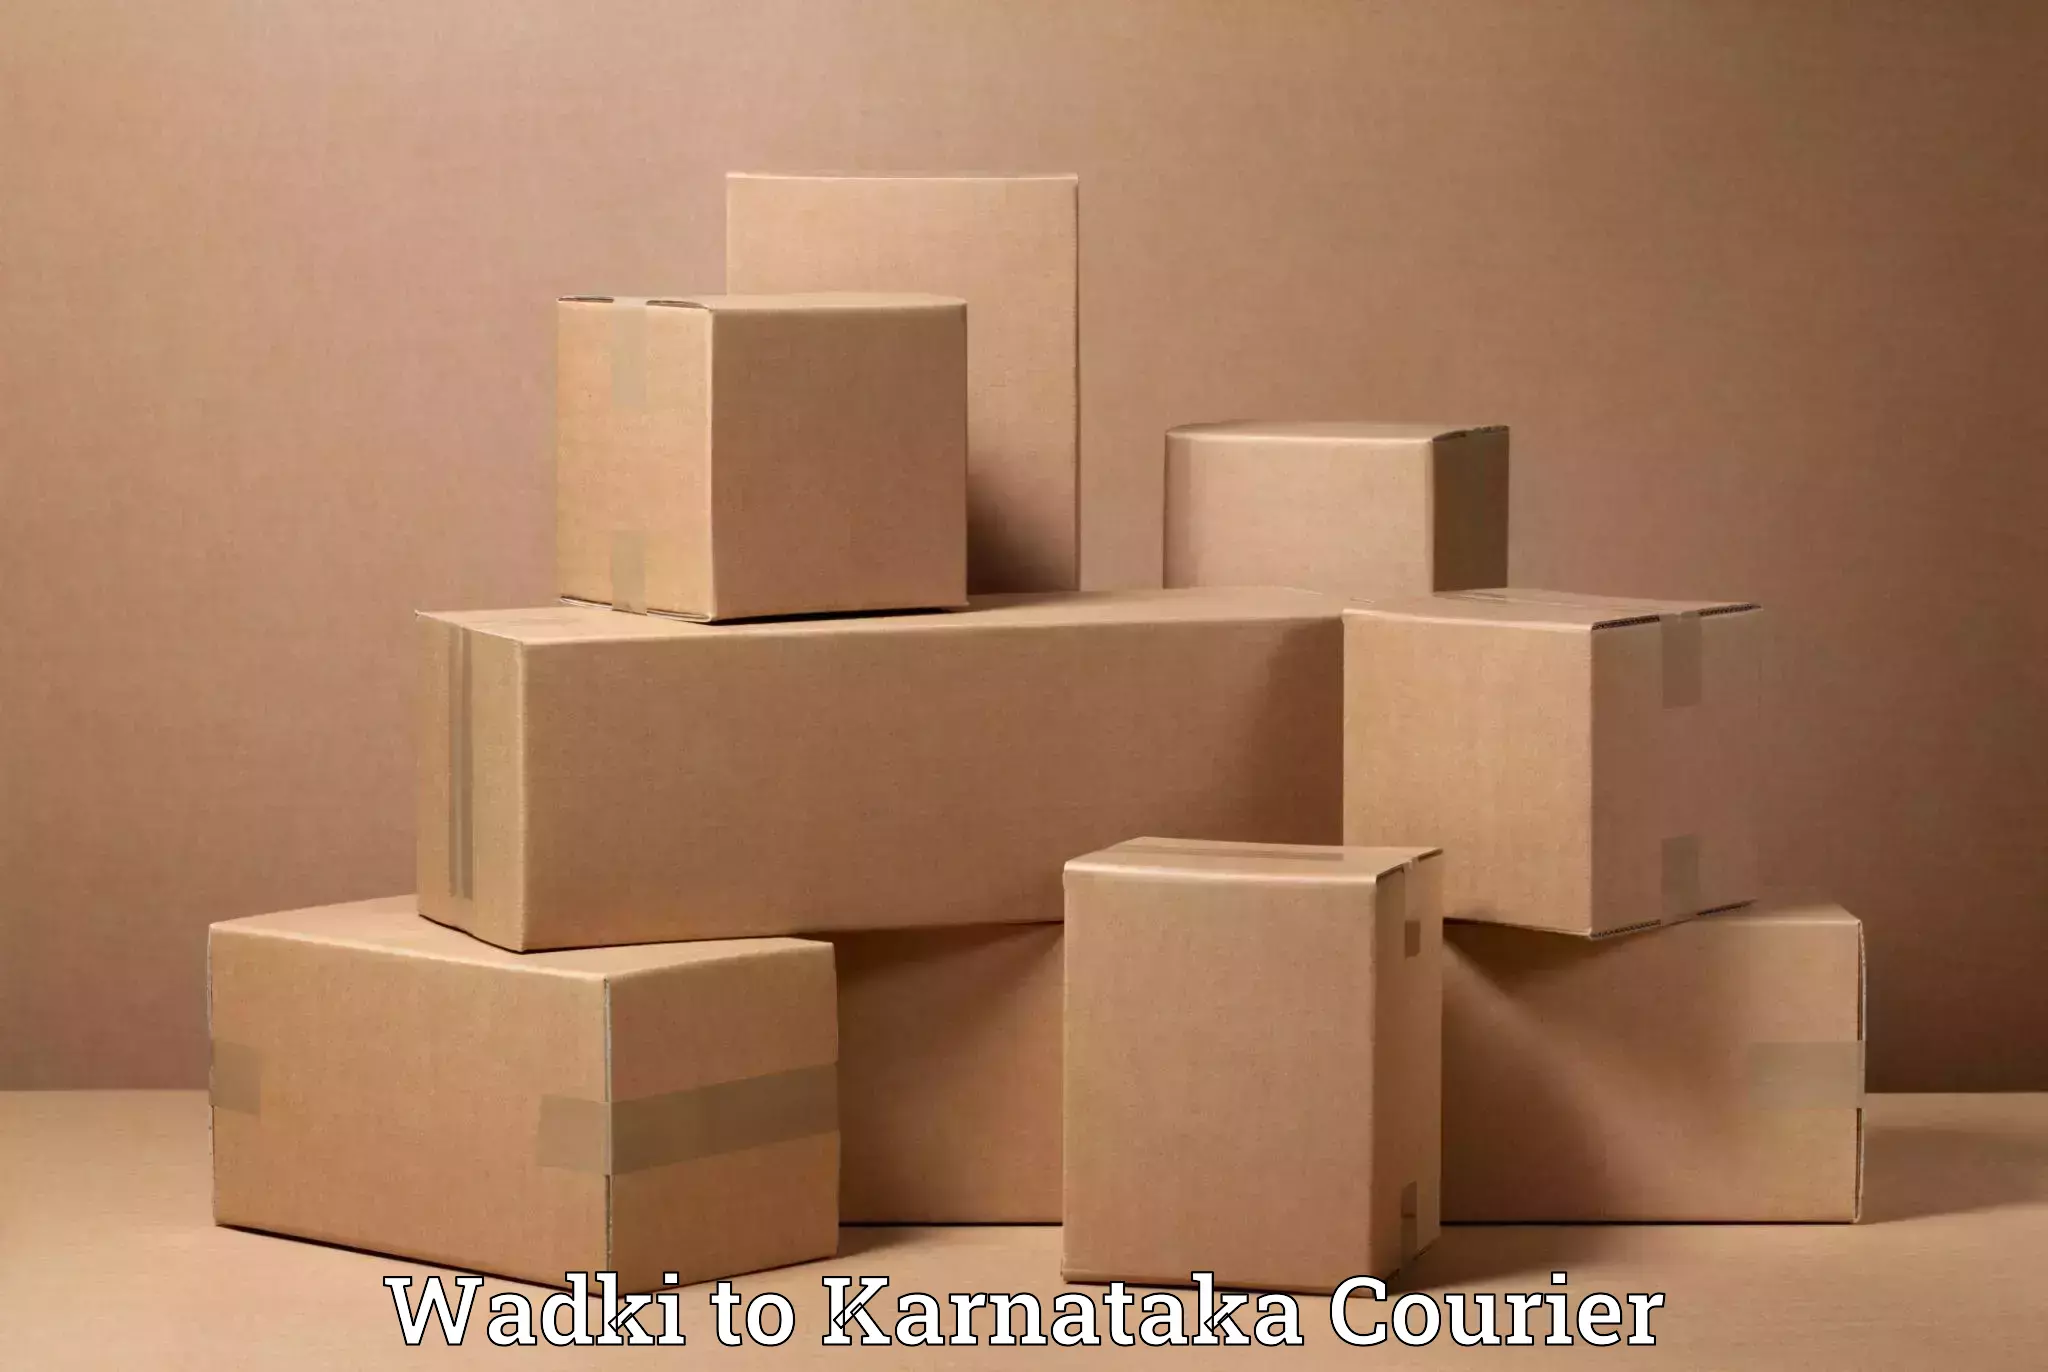 Cost-effective moving options Wadki to Toranagallu